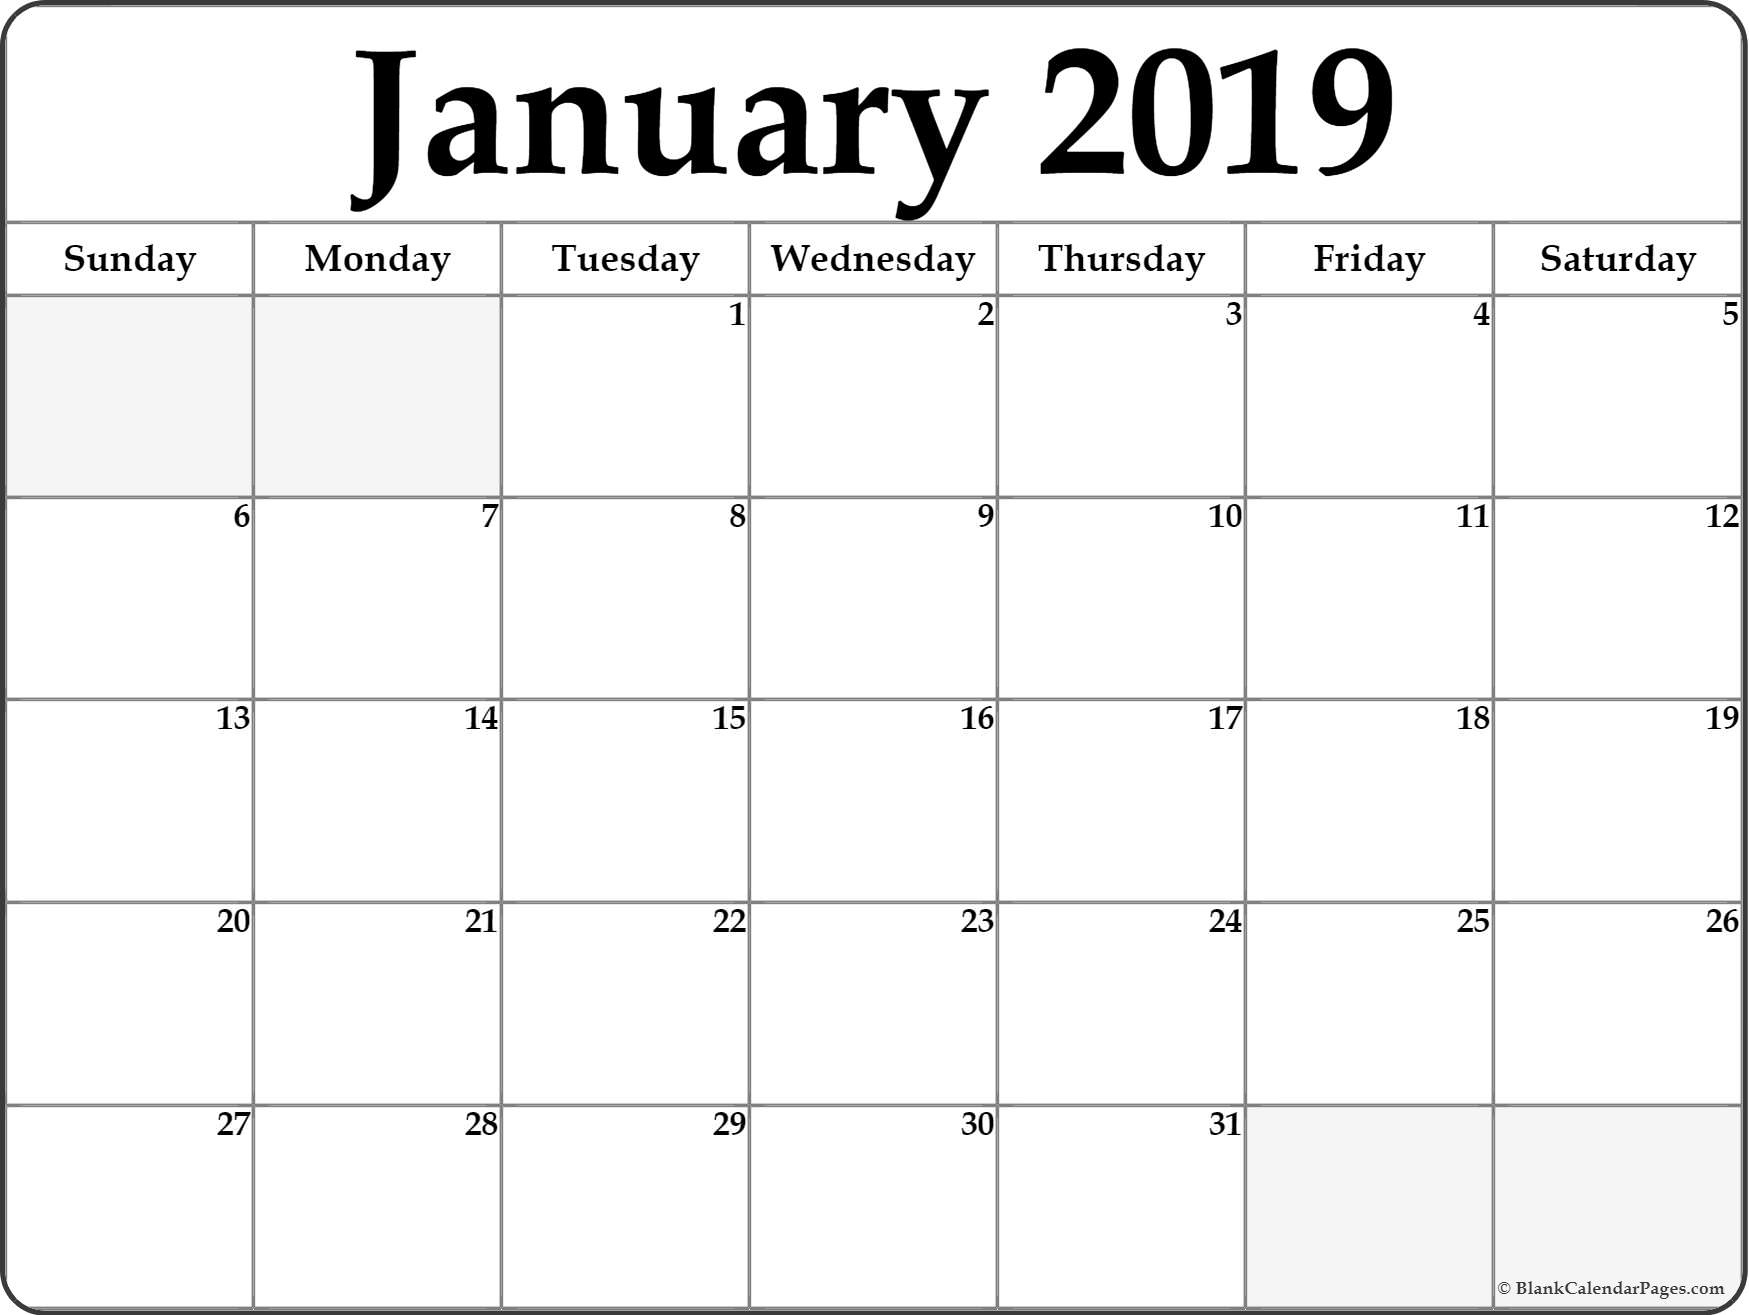 January 2019 Blank Calendar Templates. Incredible A Blank Calendar Page